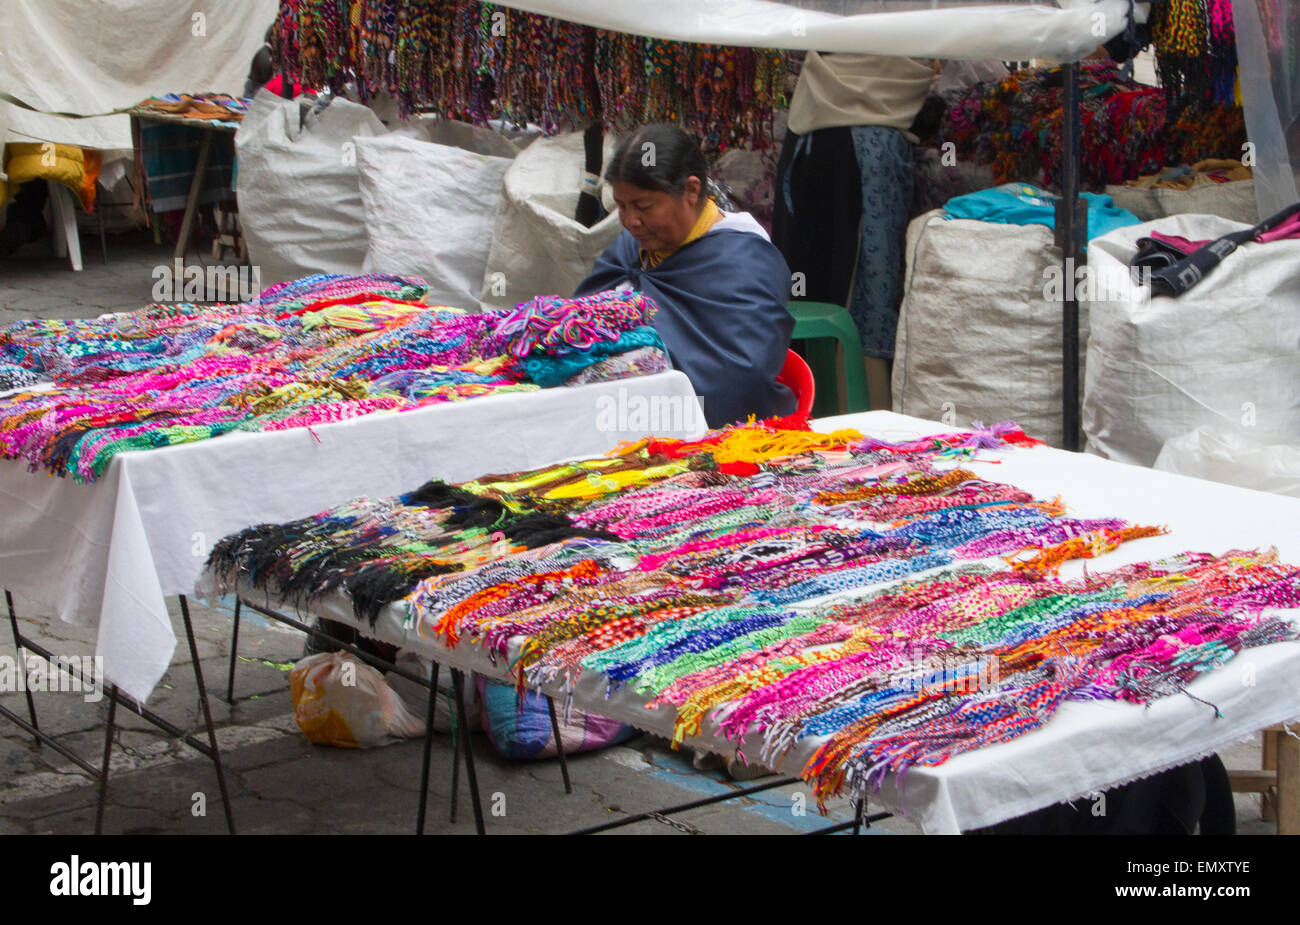 Female merchant with merchandise on display for sale at Otavalo market, Ecuador Stock Photo